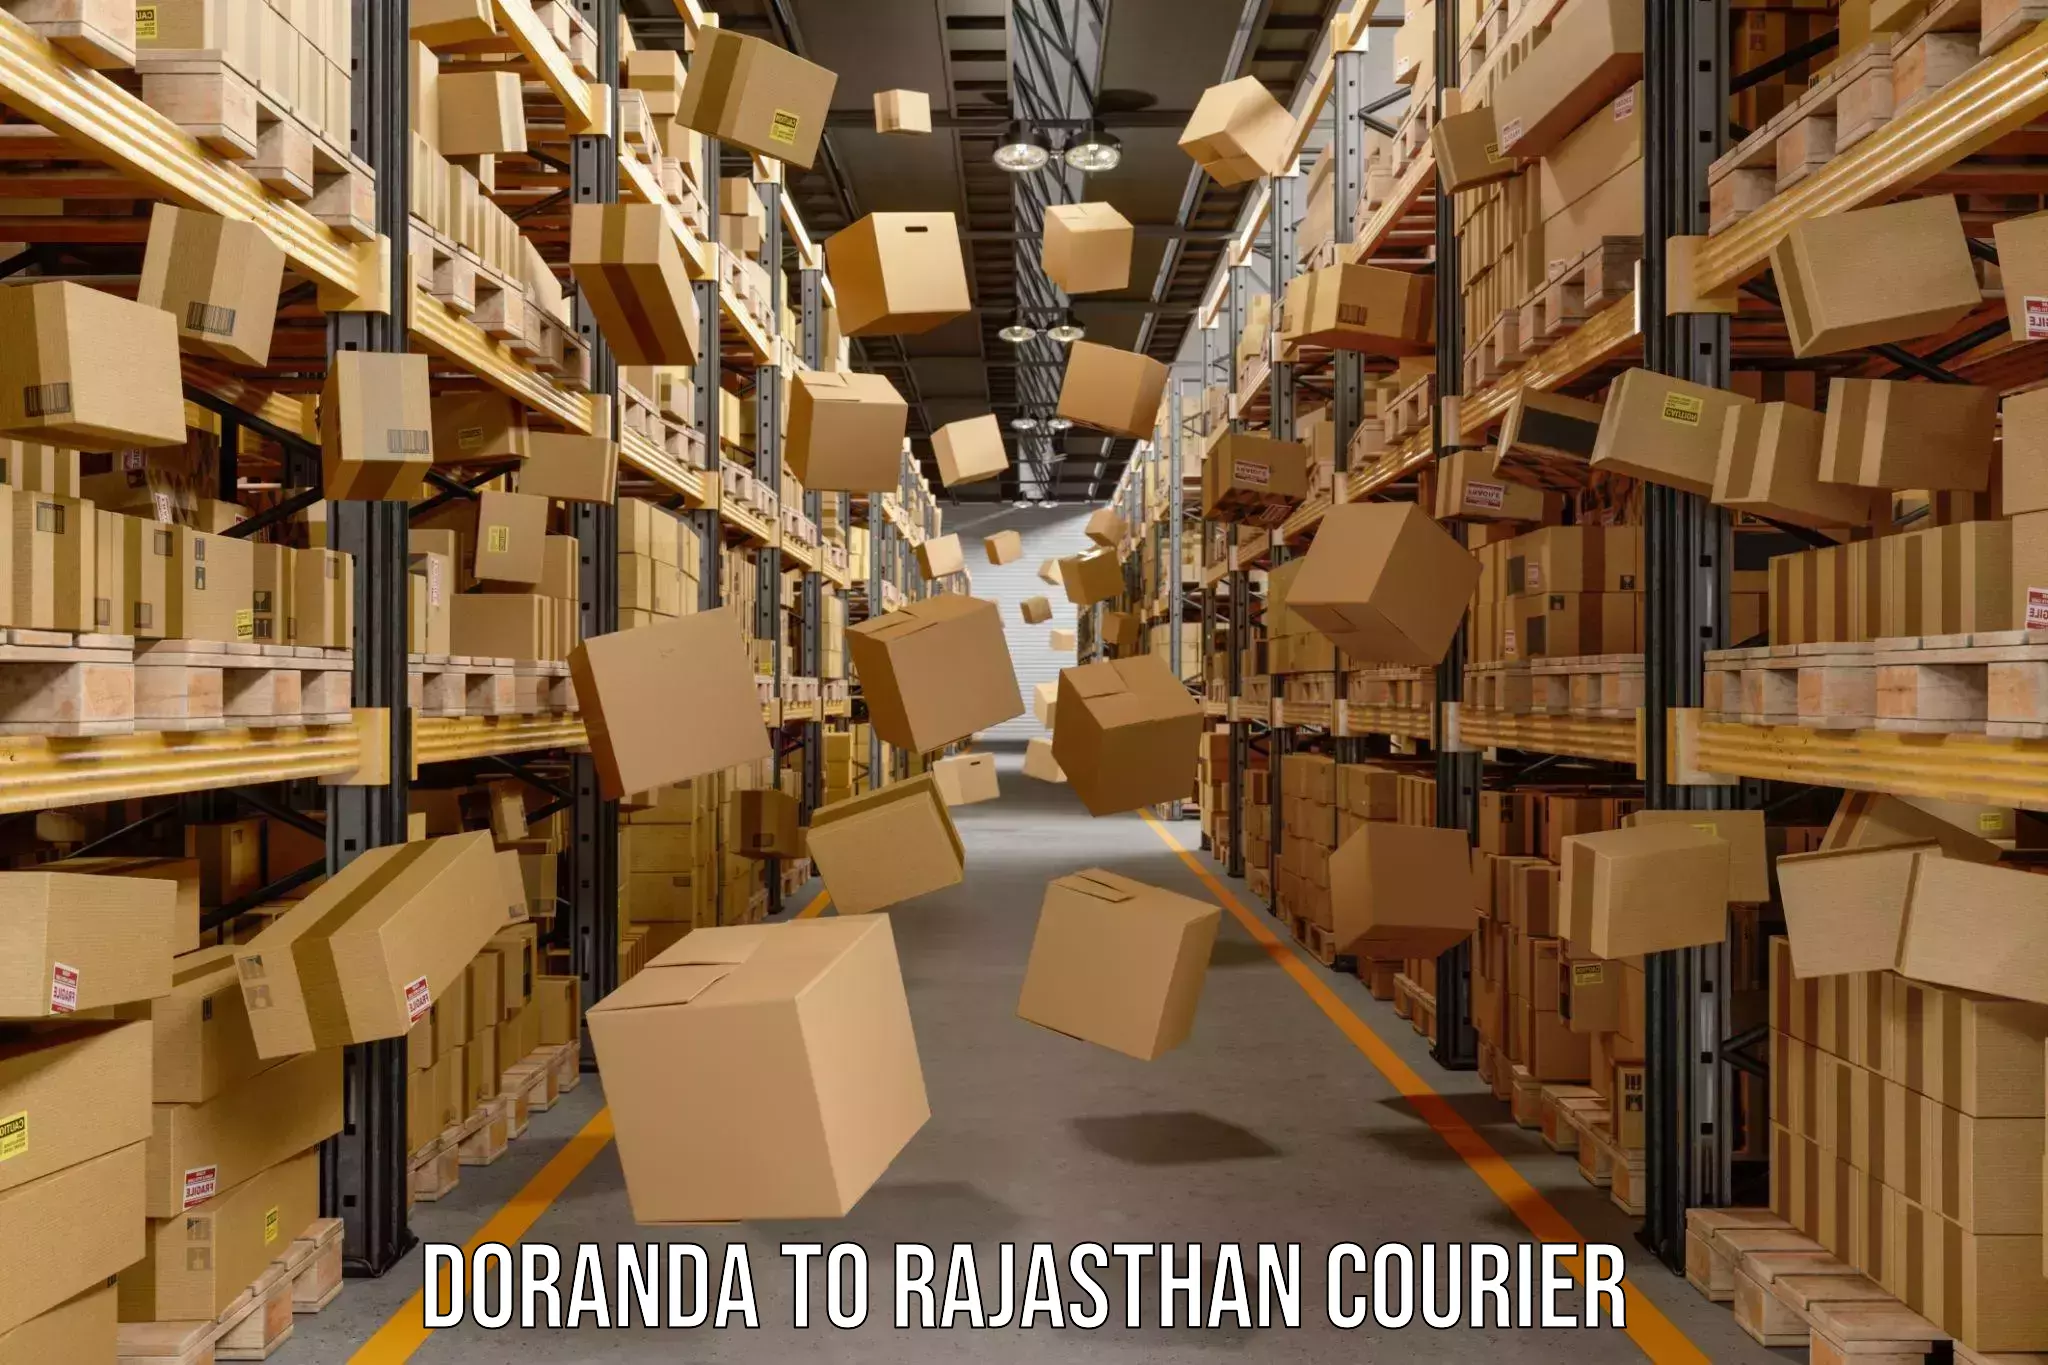 Courier service comparison Doranda to Ghator